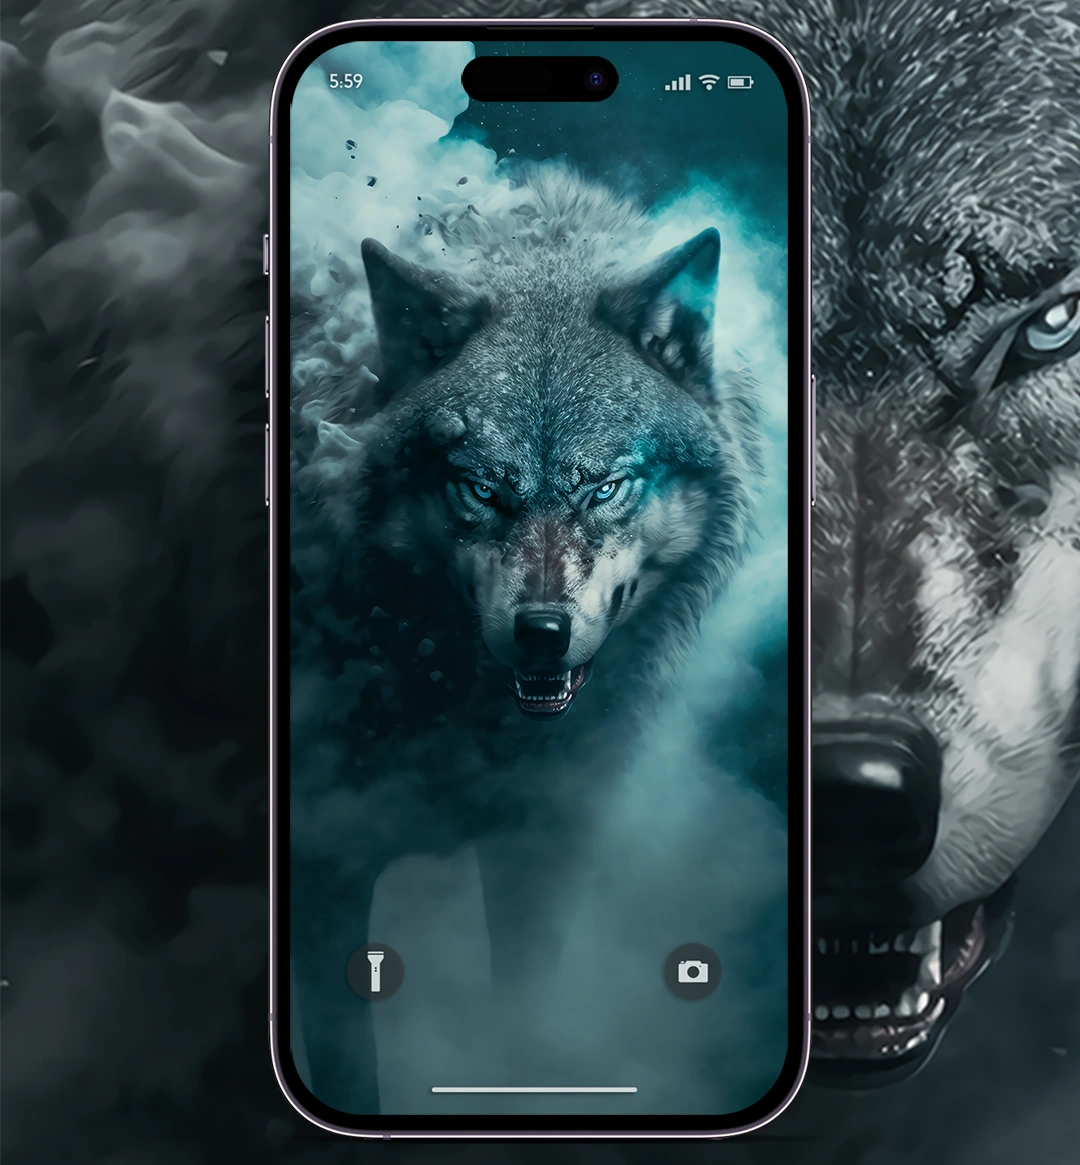 K ai wolf wallpaper iphone